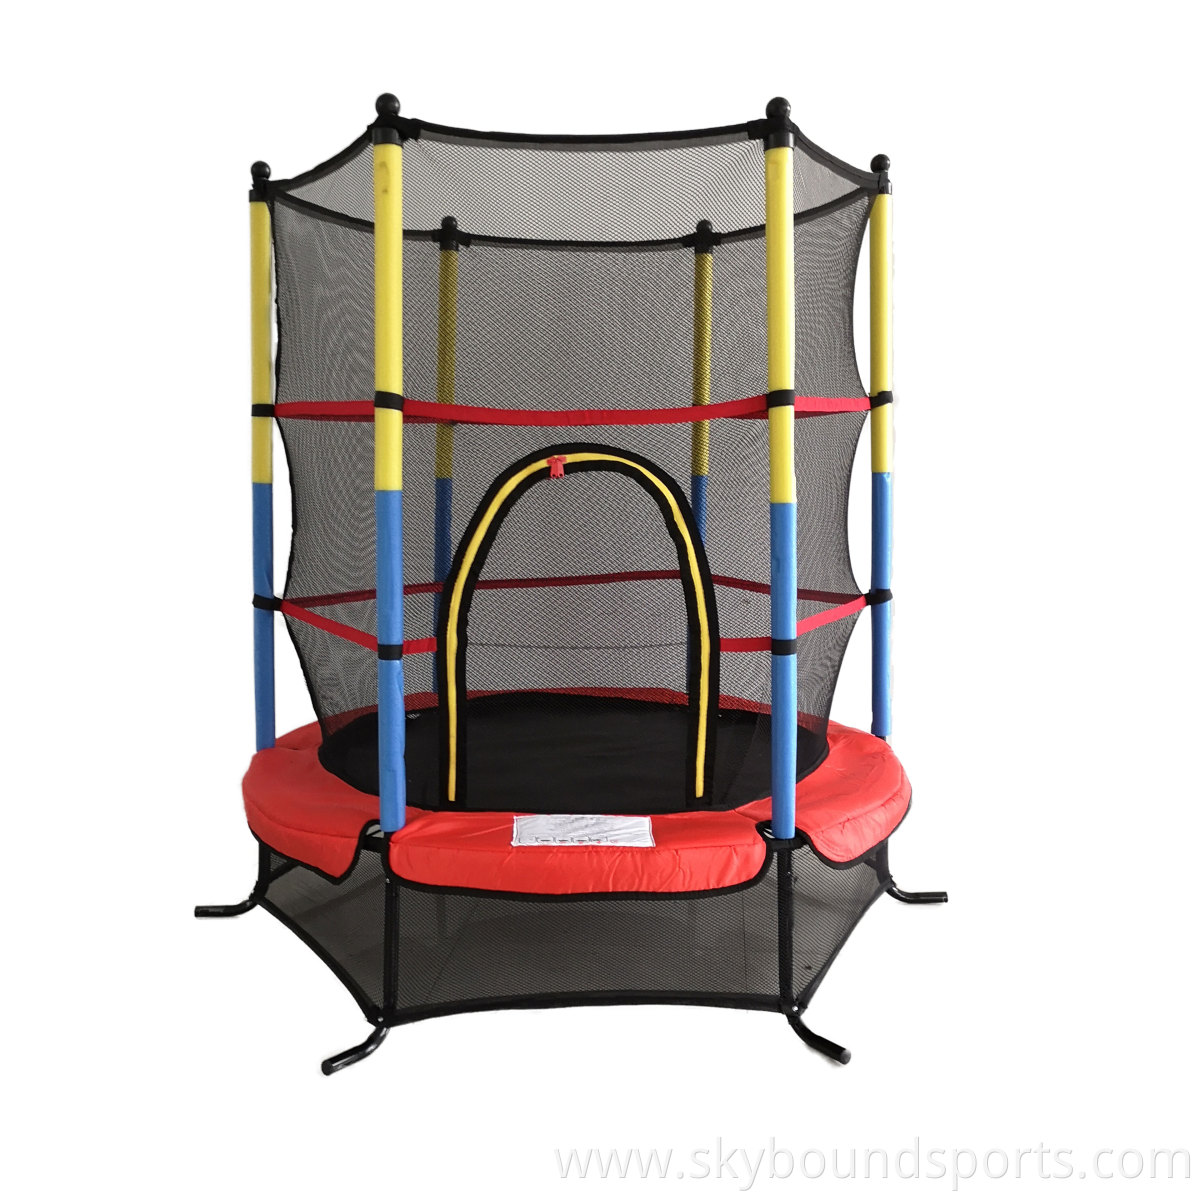 Children's Indoor Trampoline Jumper 140 cm Edge Cover Padded Poles, Rubber Rope Suspension Safety Net